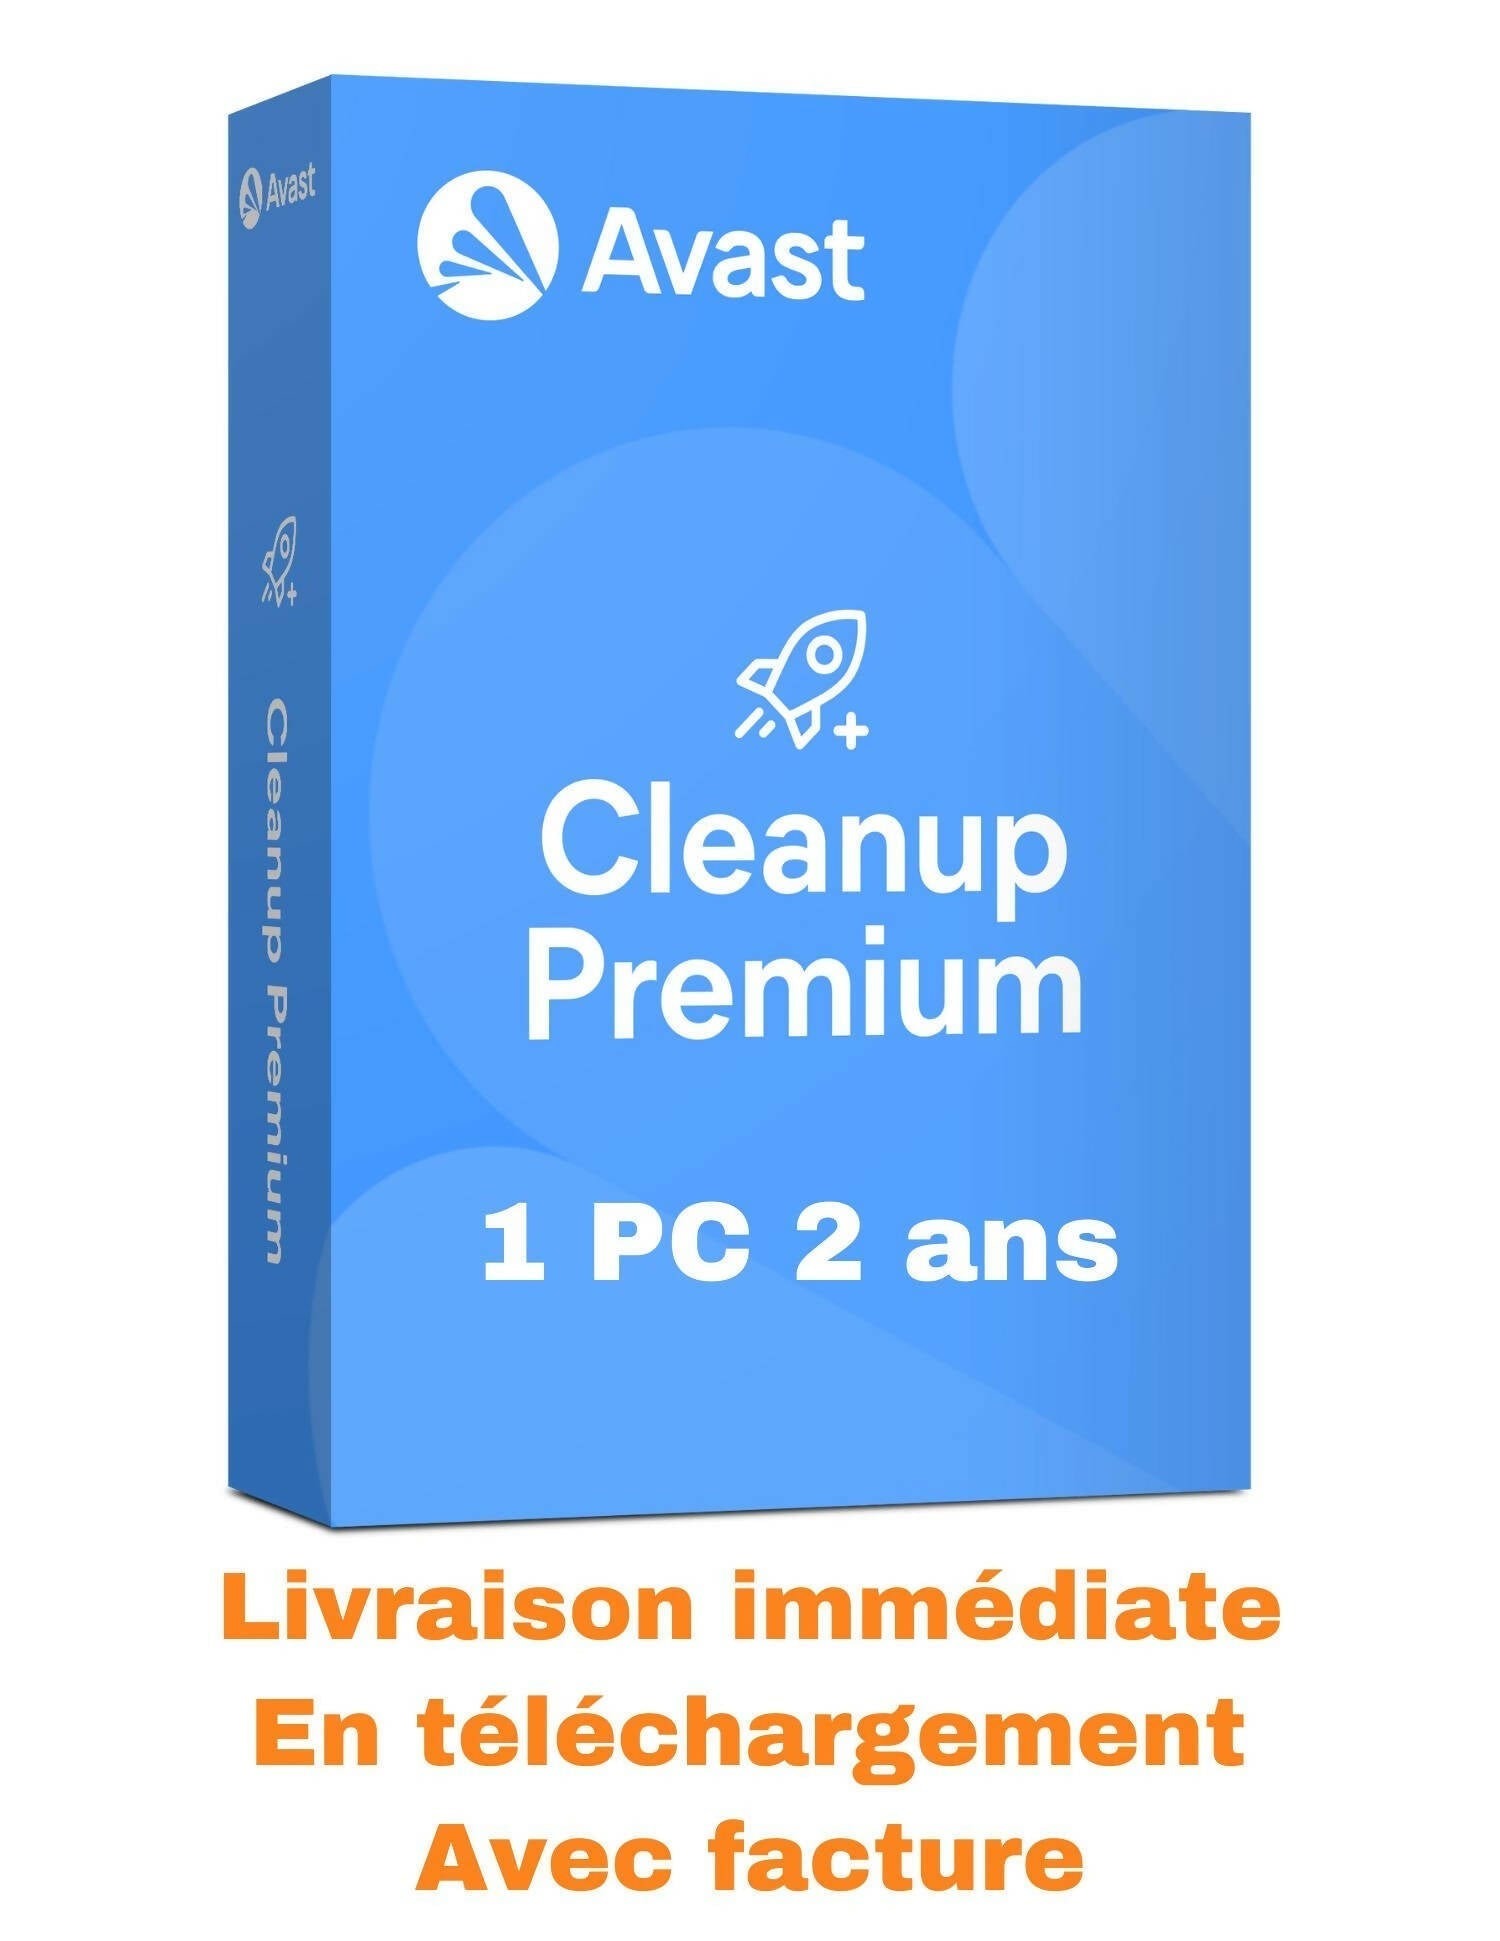 Avast Cleanup Premium 1 PC 2 ans clicktofournisseur.com